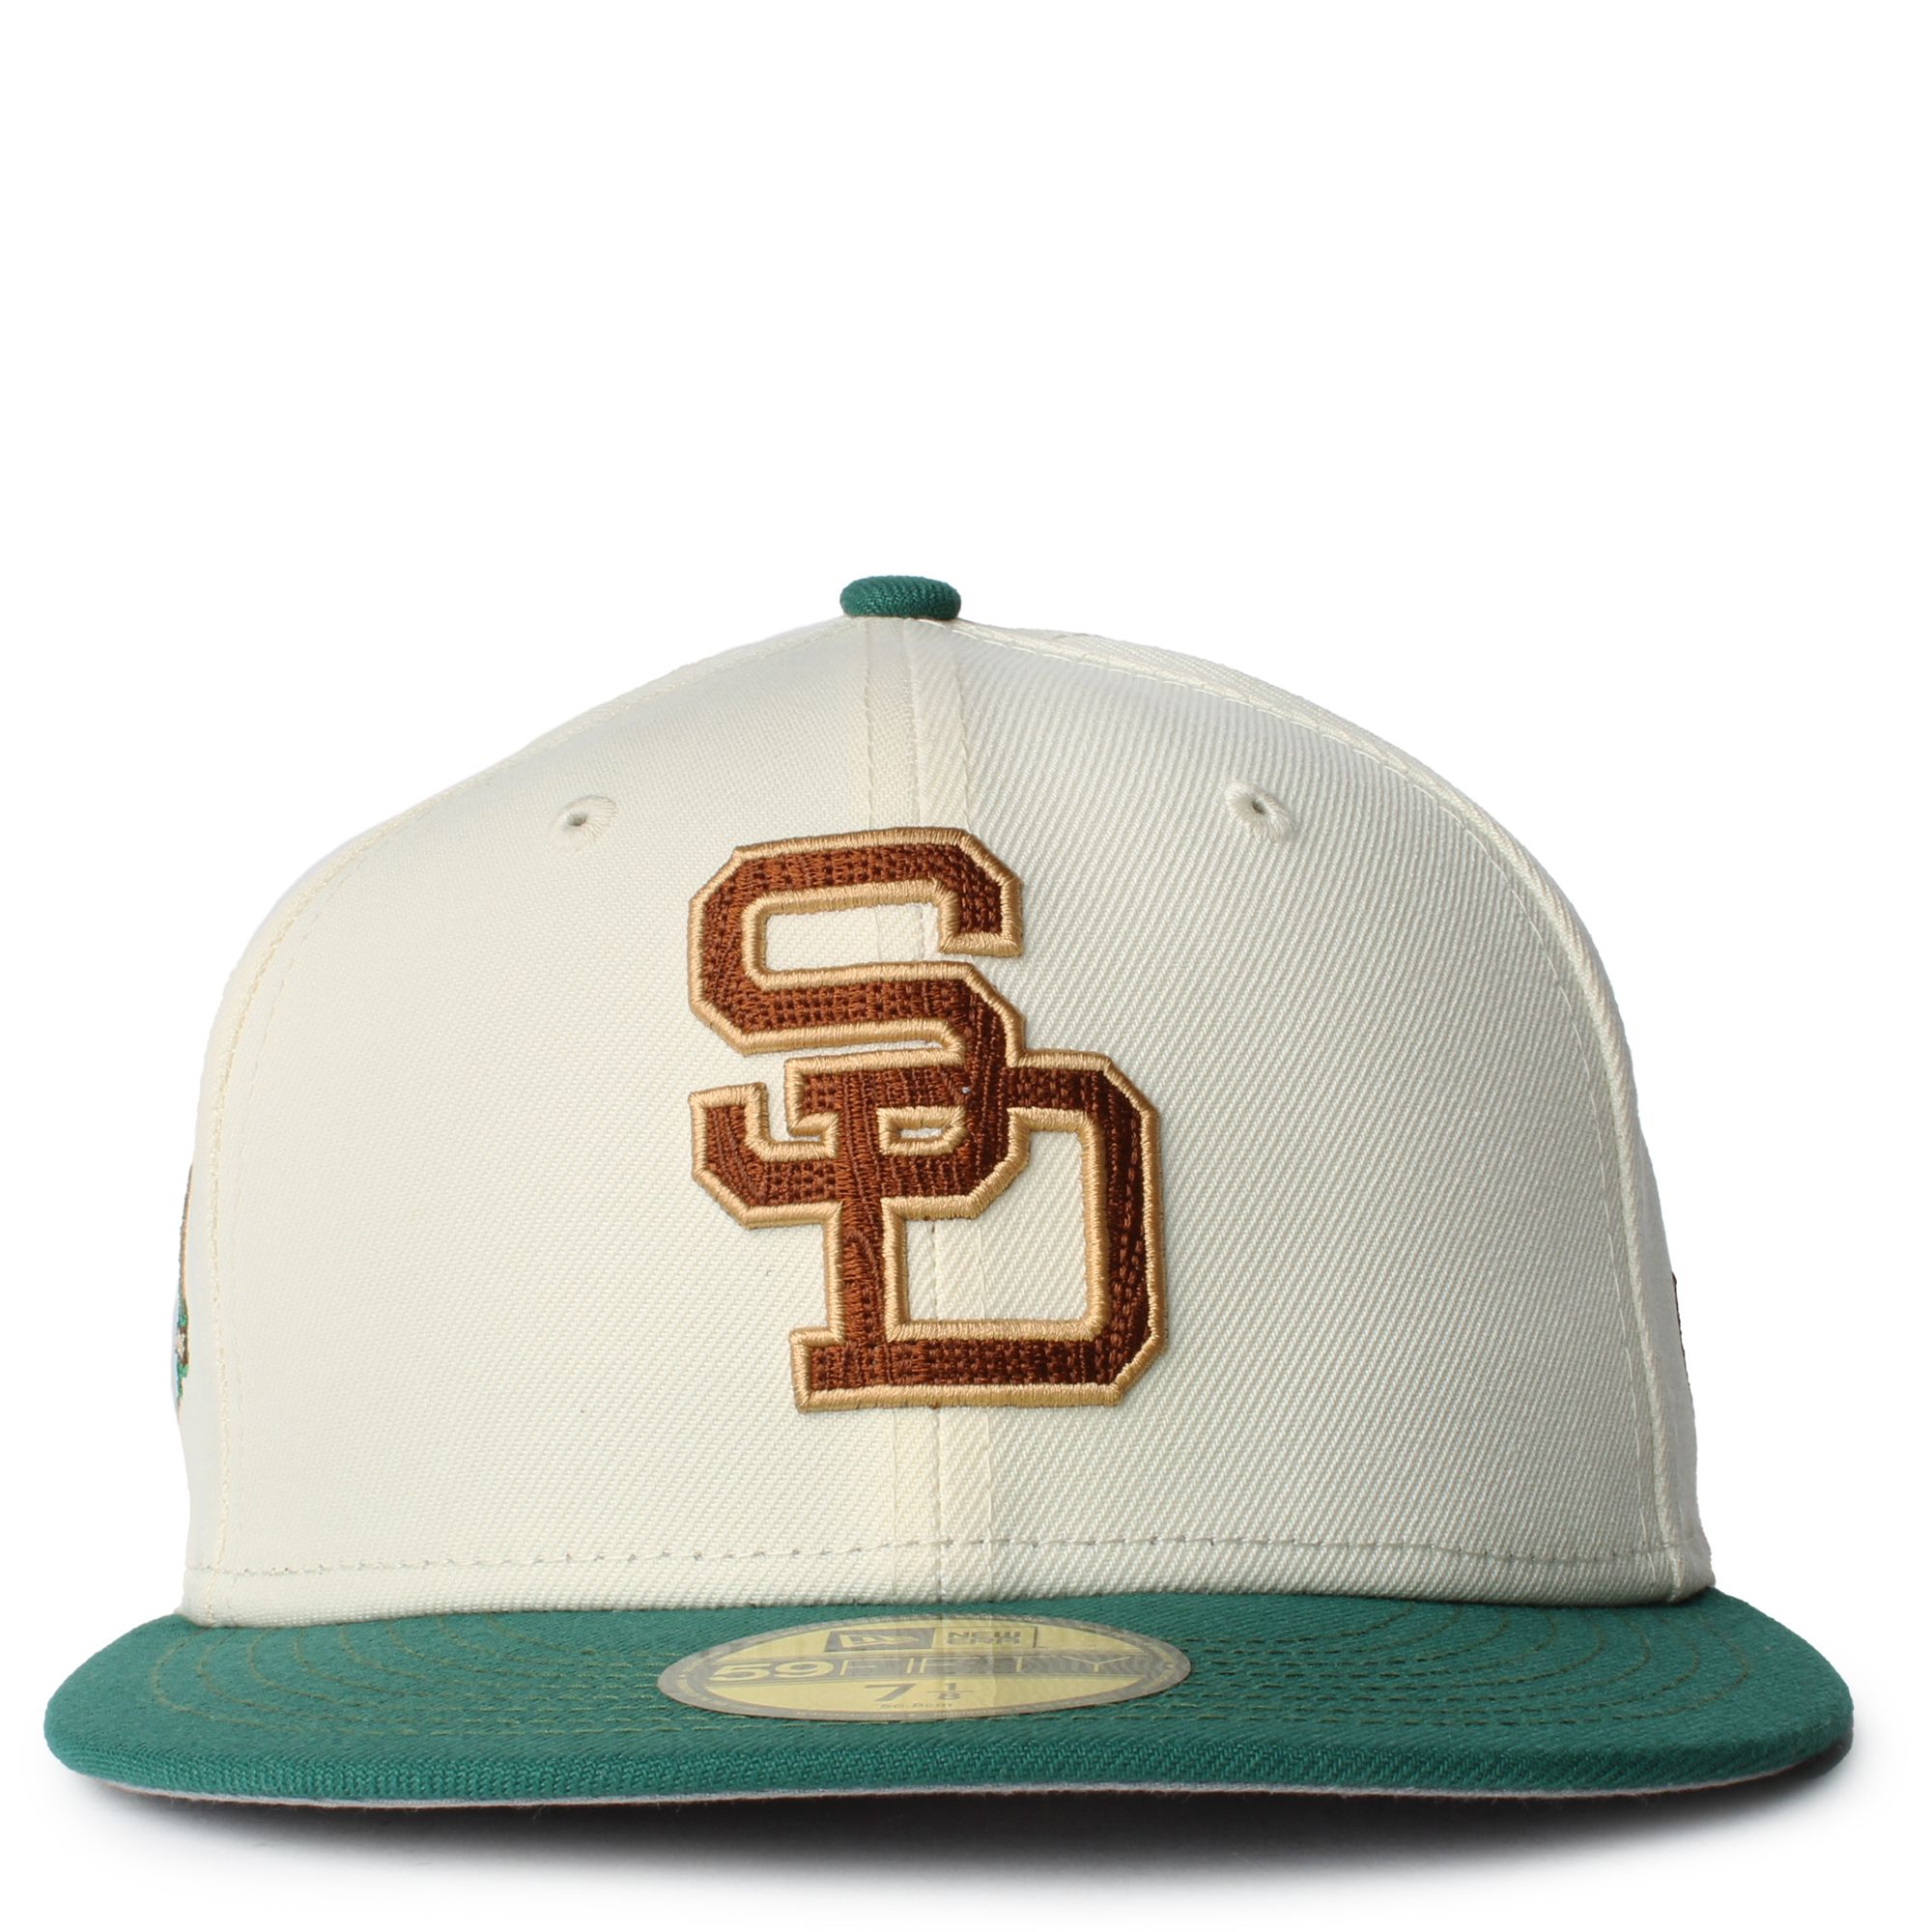 Oakland Athletics New Era 50th Anniversary Chrome Alternate Undervisor  59FIFTY Fitted Hat - Cream